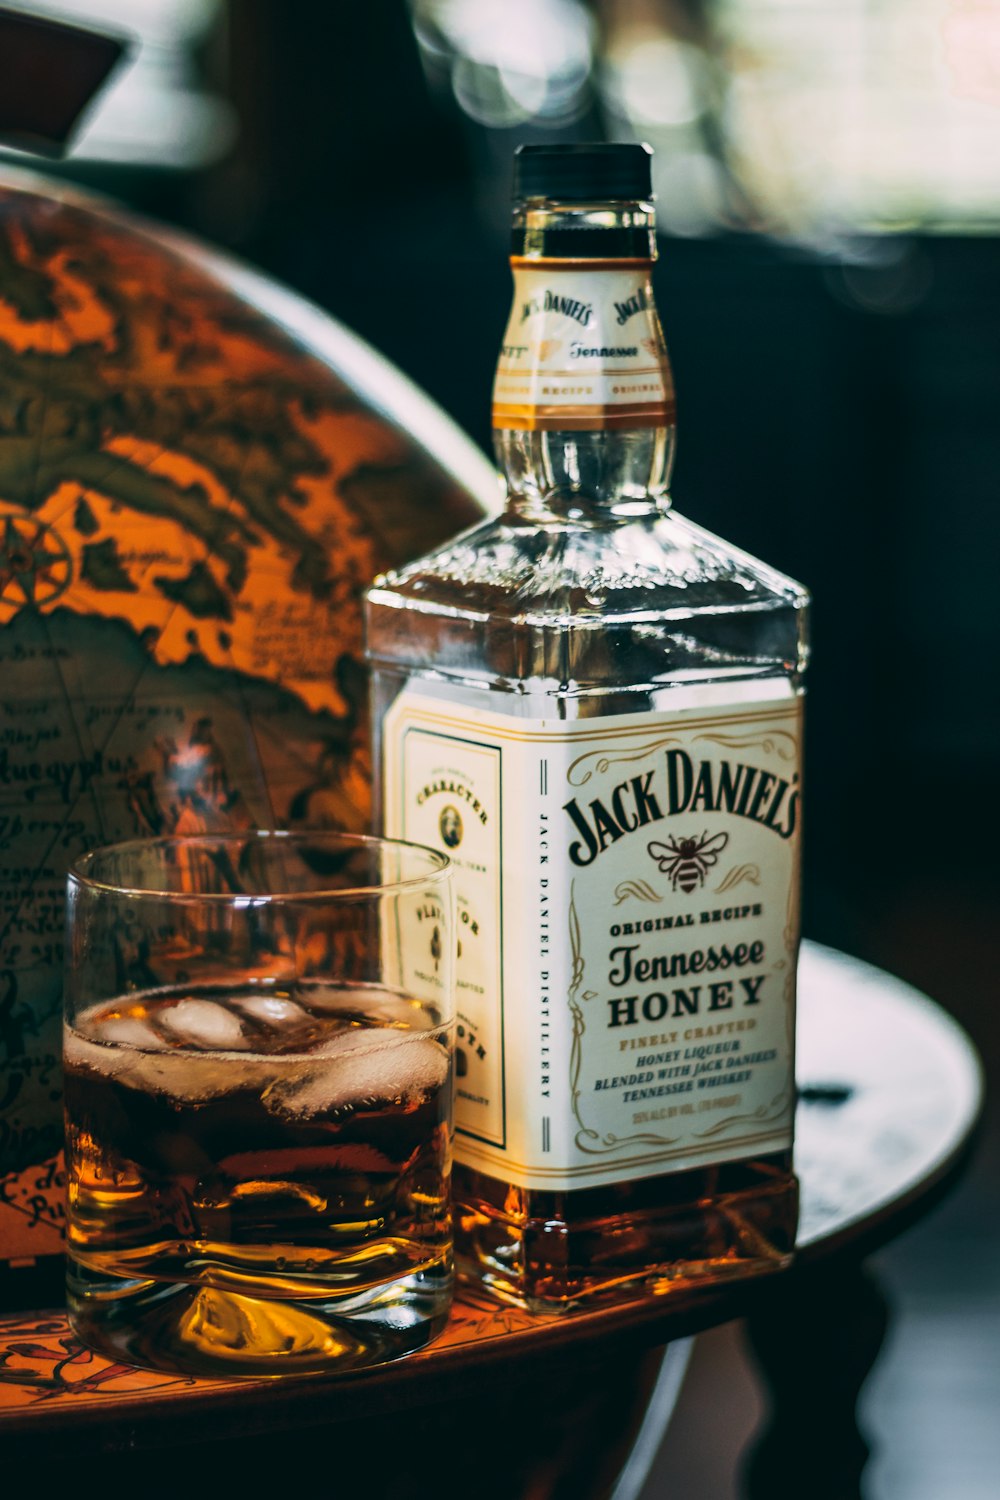 Jack Daniels Tennessee whisky bottle